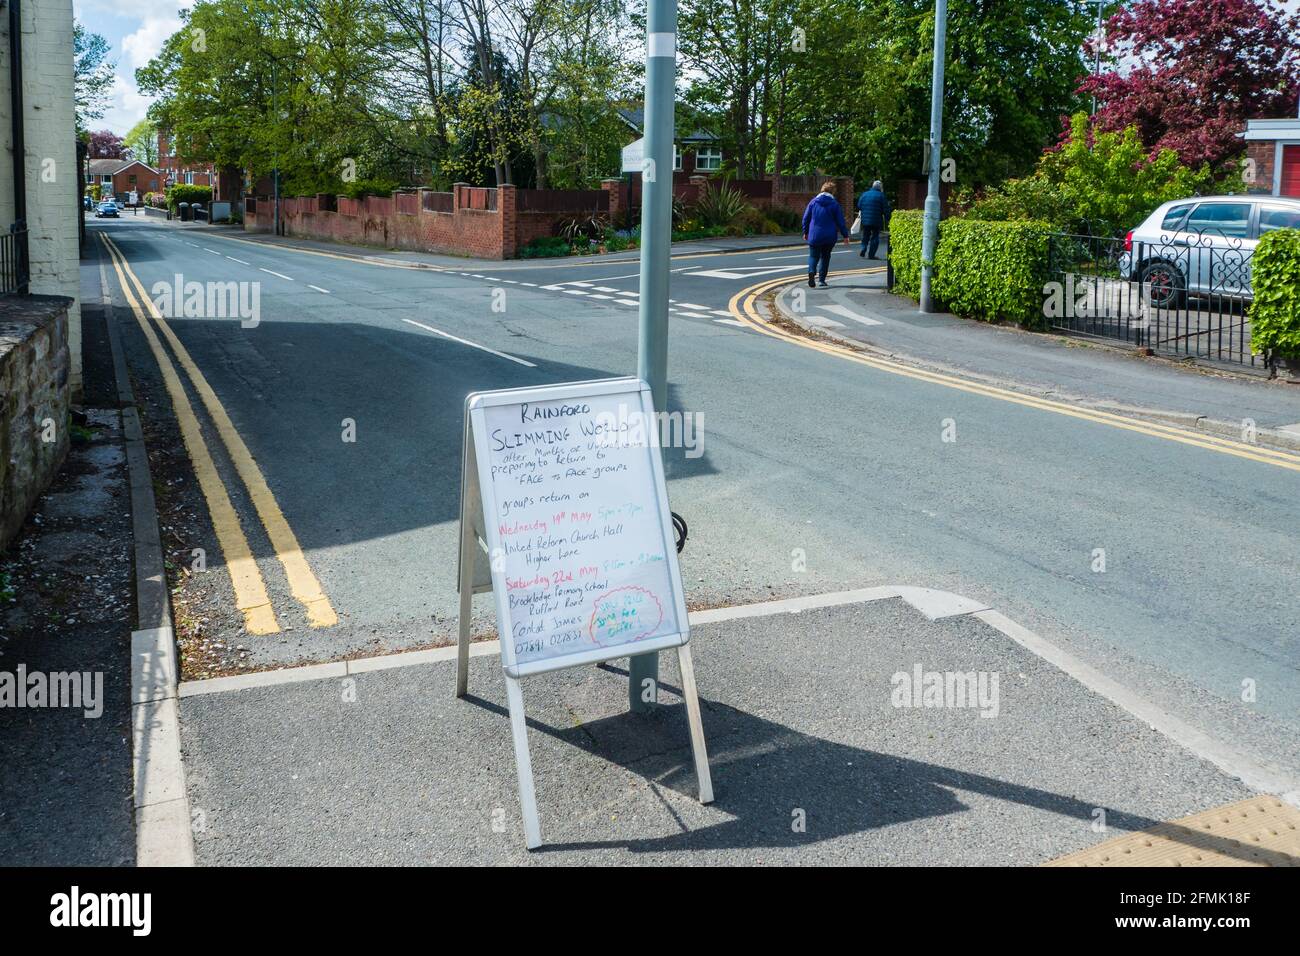 07.05.21 Moss Bank, St Helens, Merseyside, Royaume-Uni. Panneau blanc indiquant Slimming World à Rainford près de St Helens à Merseyside Banque D'Images